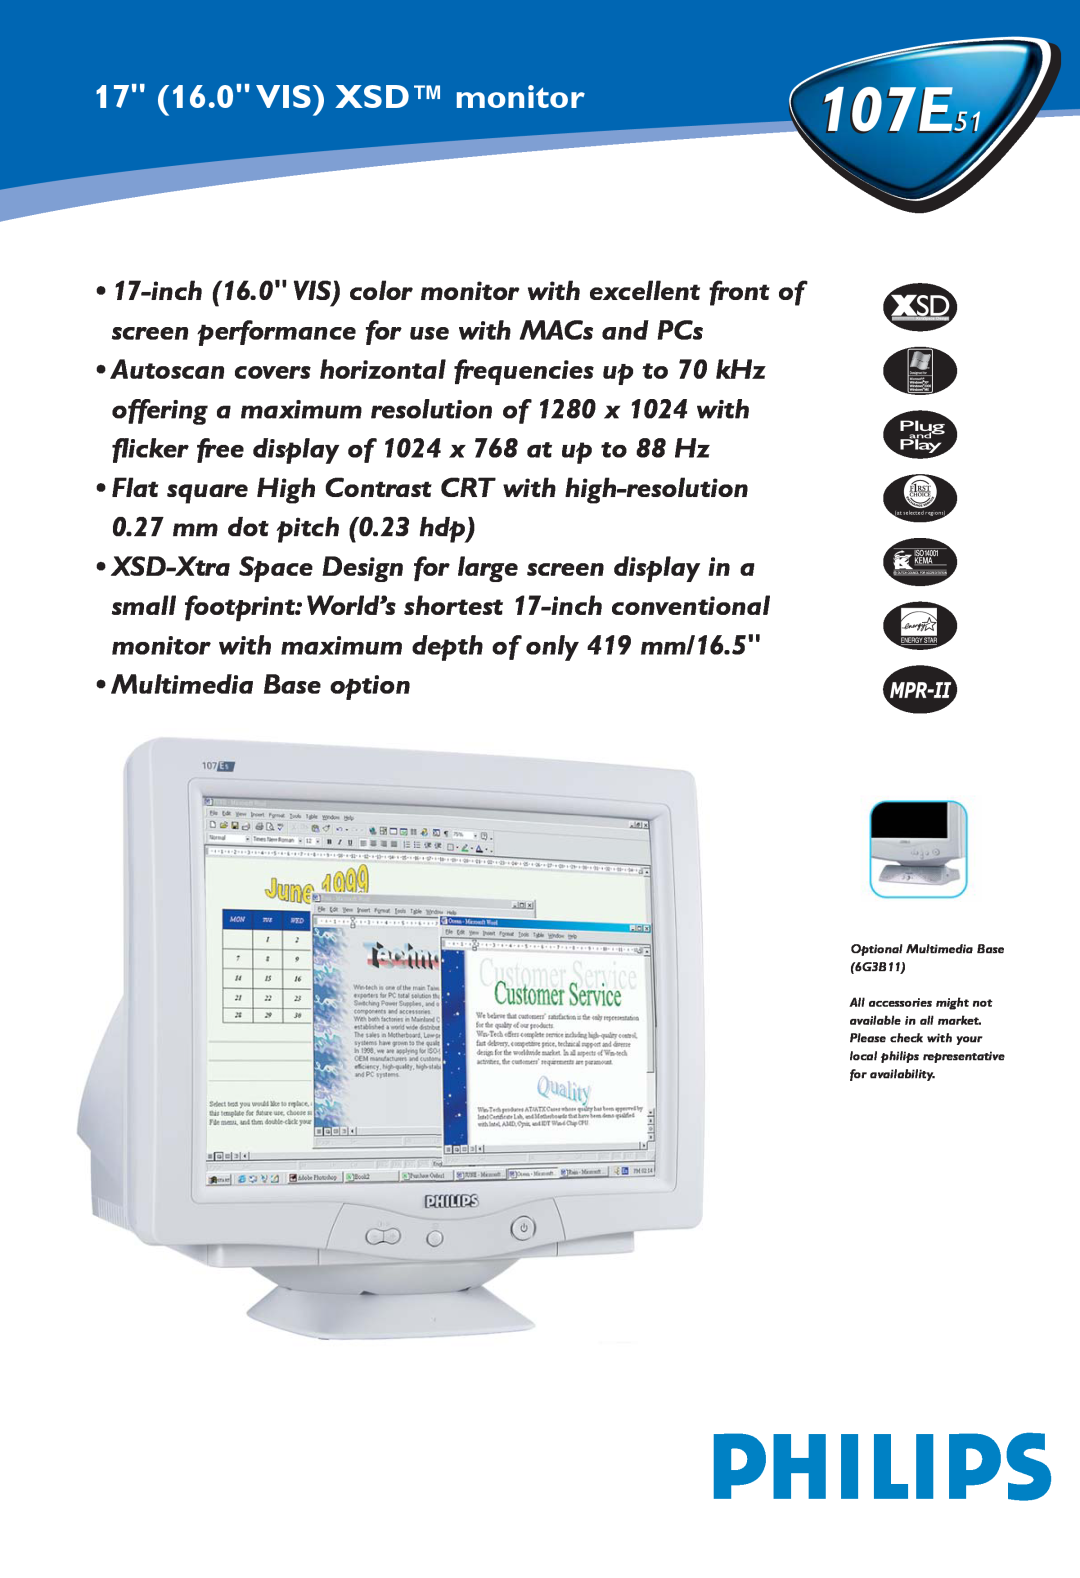 Philips 107E51 manual 17 16.0 VIS XSD monitor, Multimedia Base option 